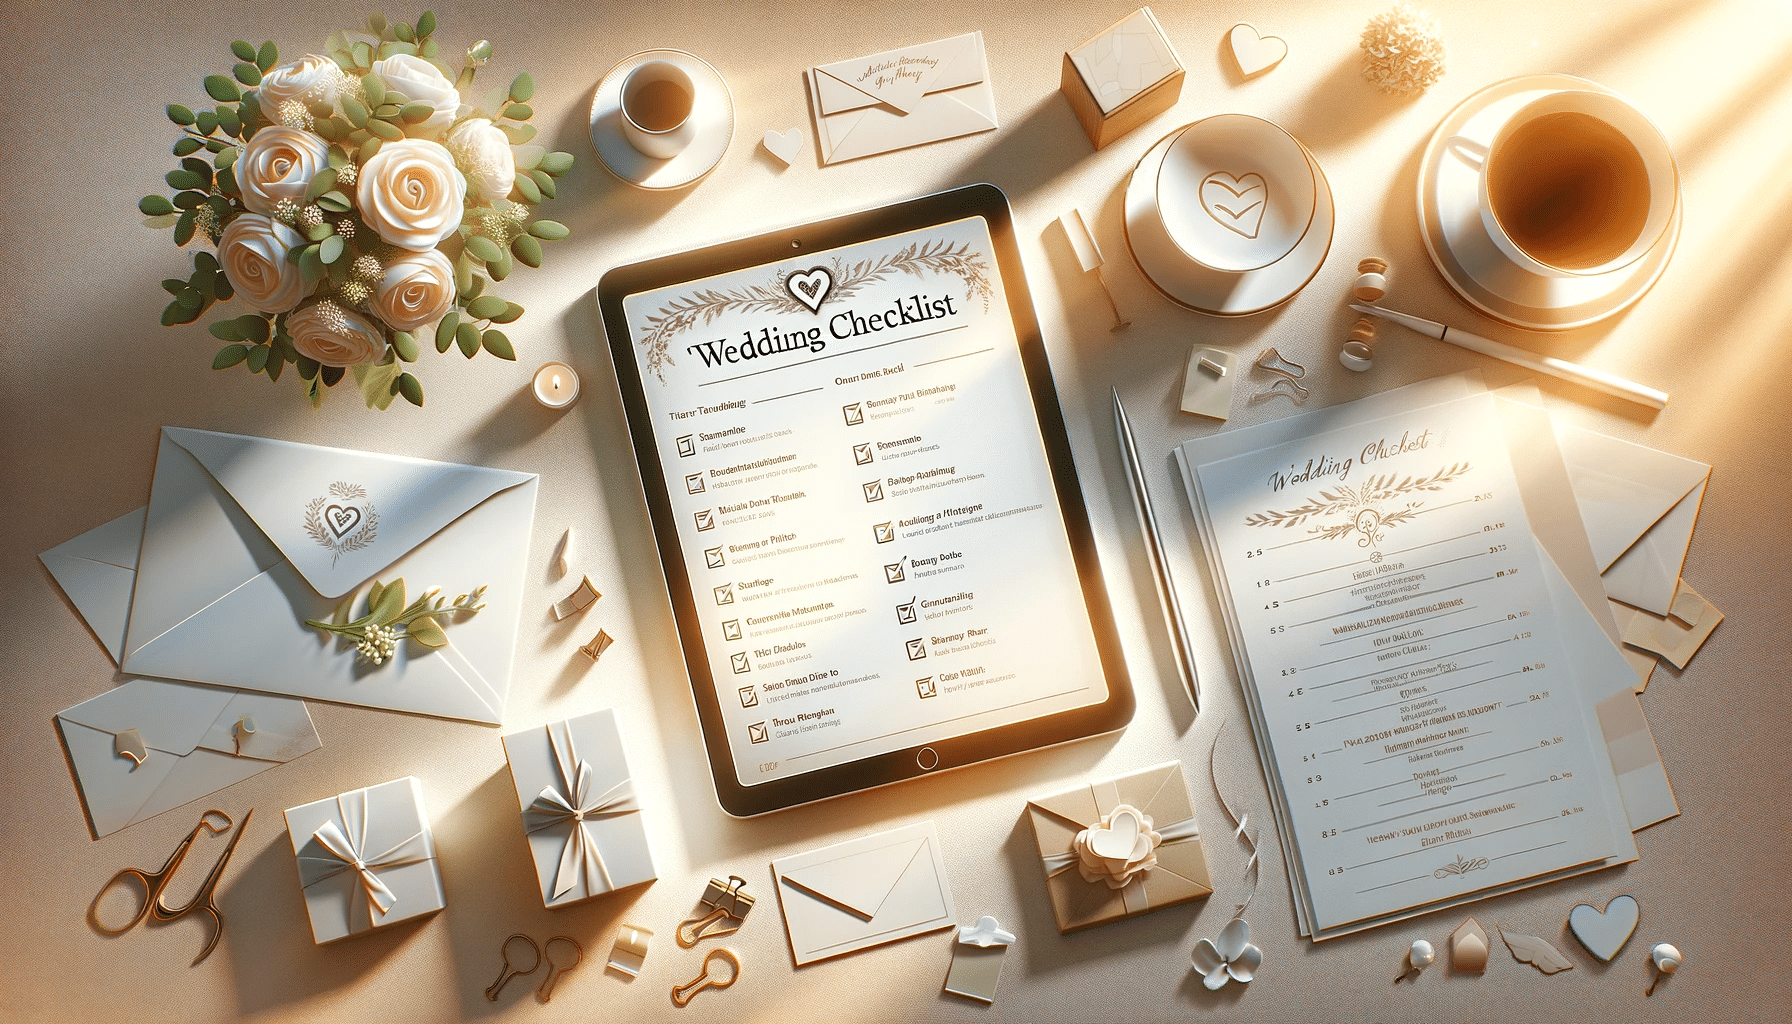 An iPad with a wedding checklist on it.